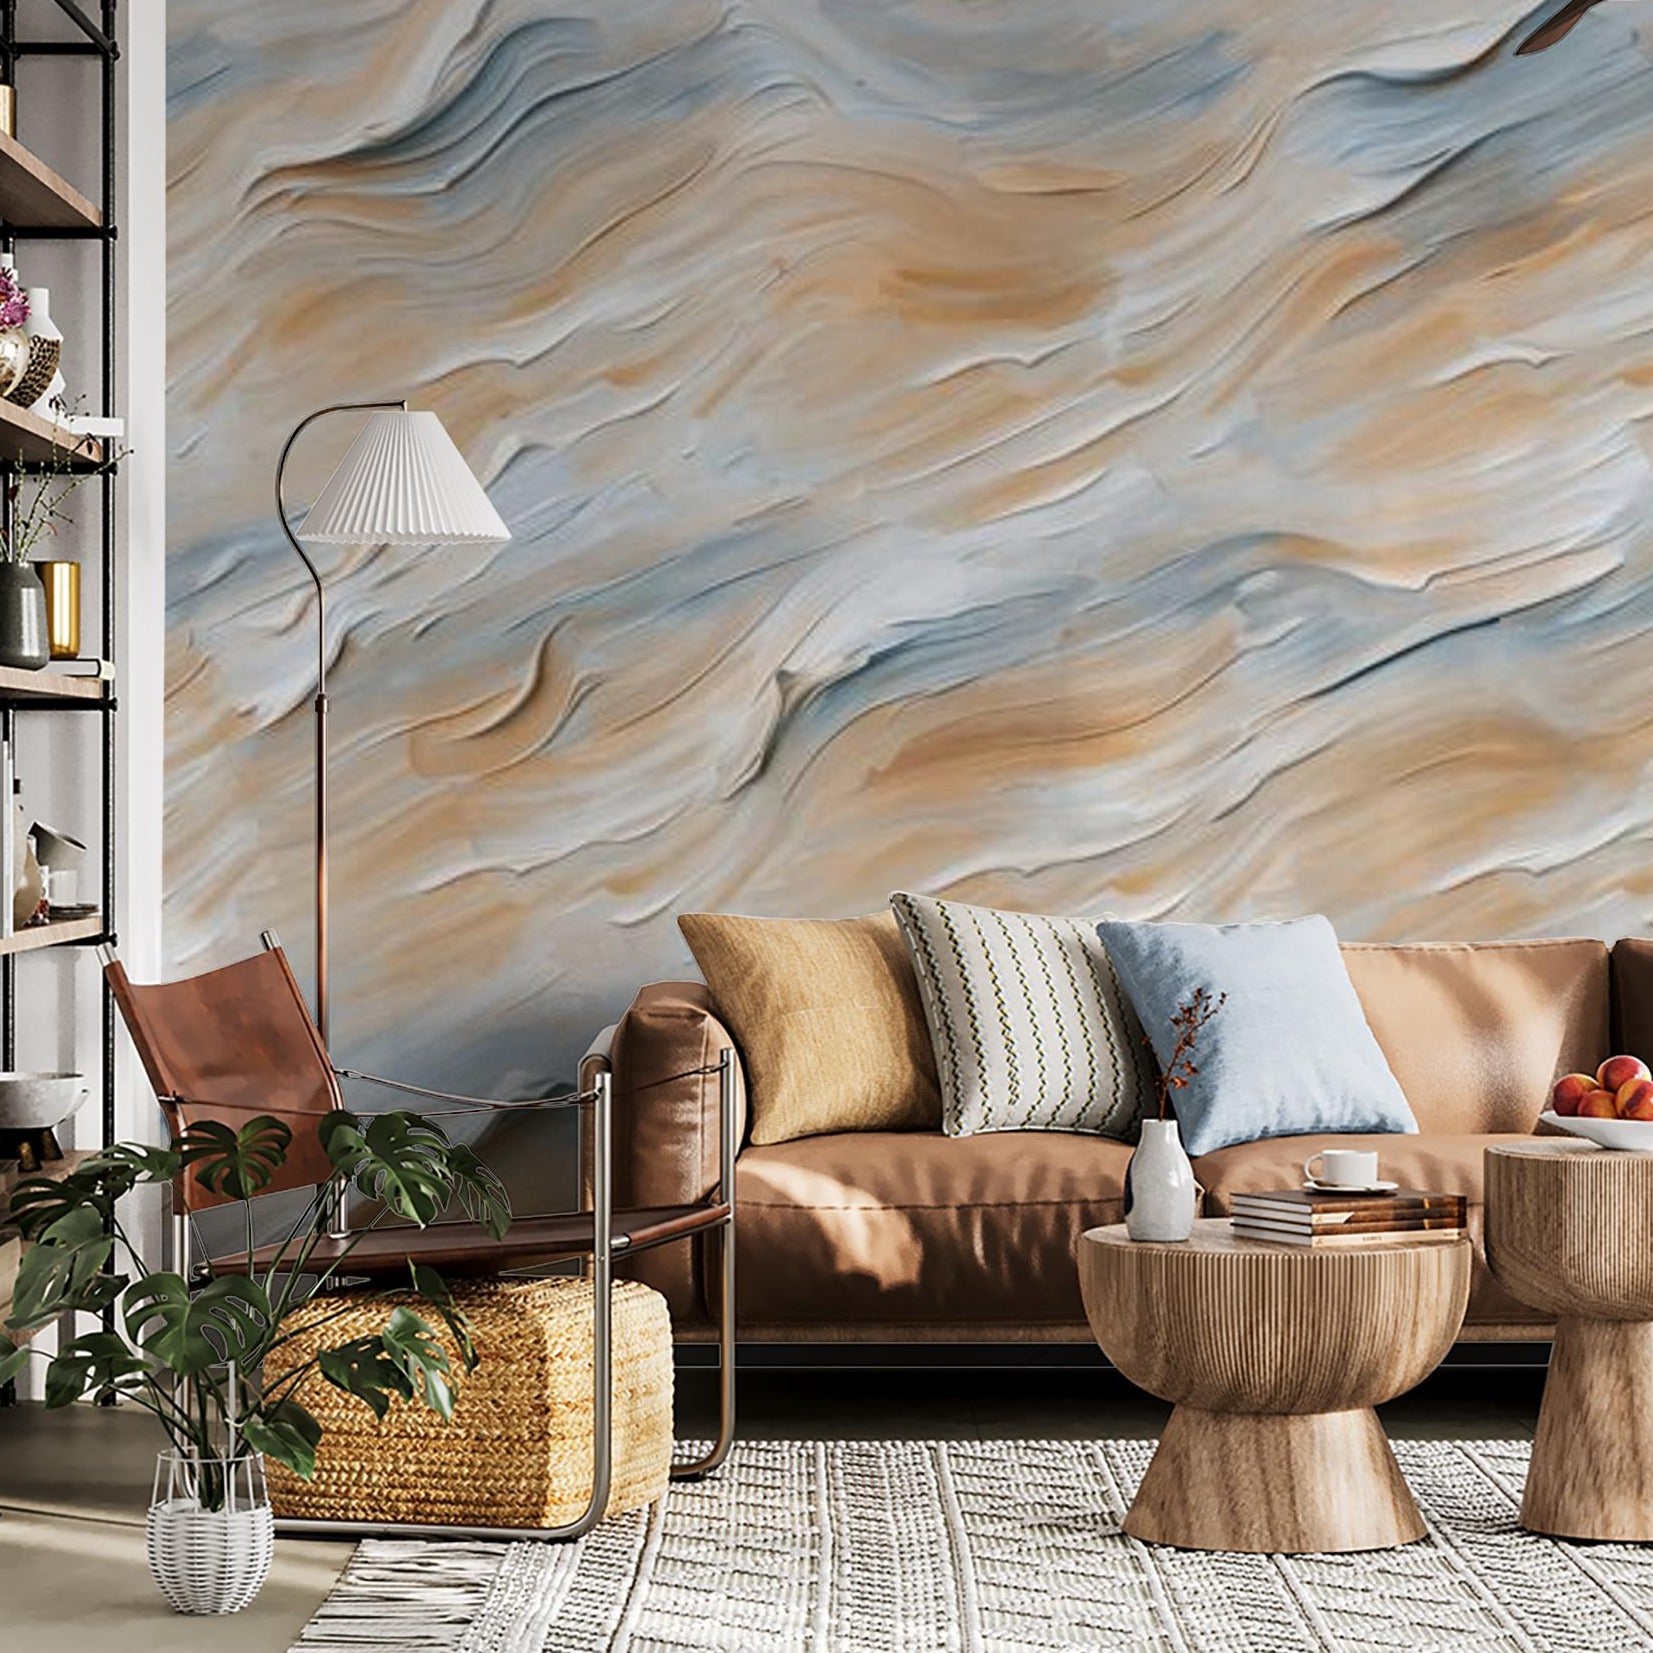 "Modern living room adorned with Coastal Drift Wallpaper by Wall Blush, showcasing elegant, swirling patterns."